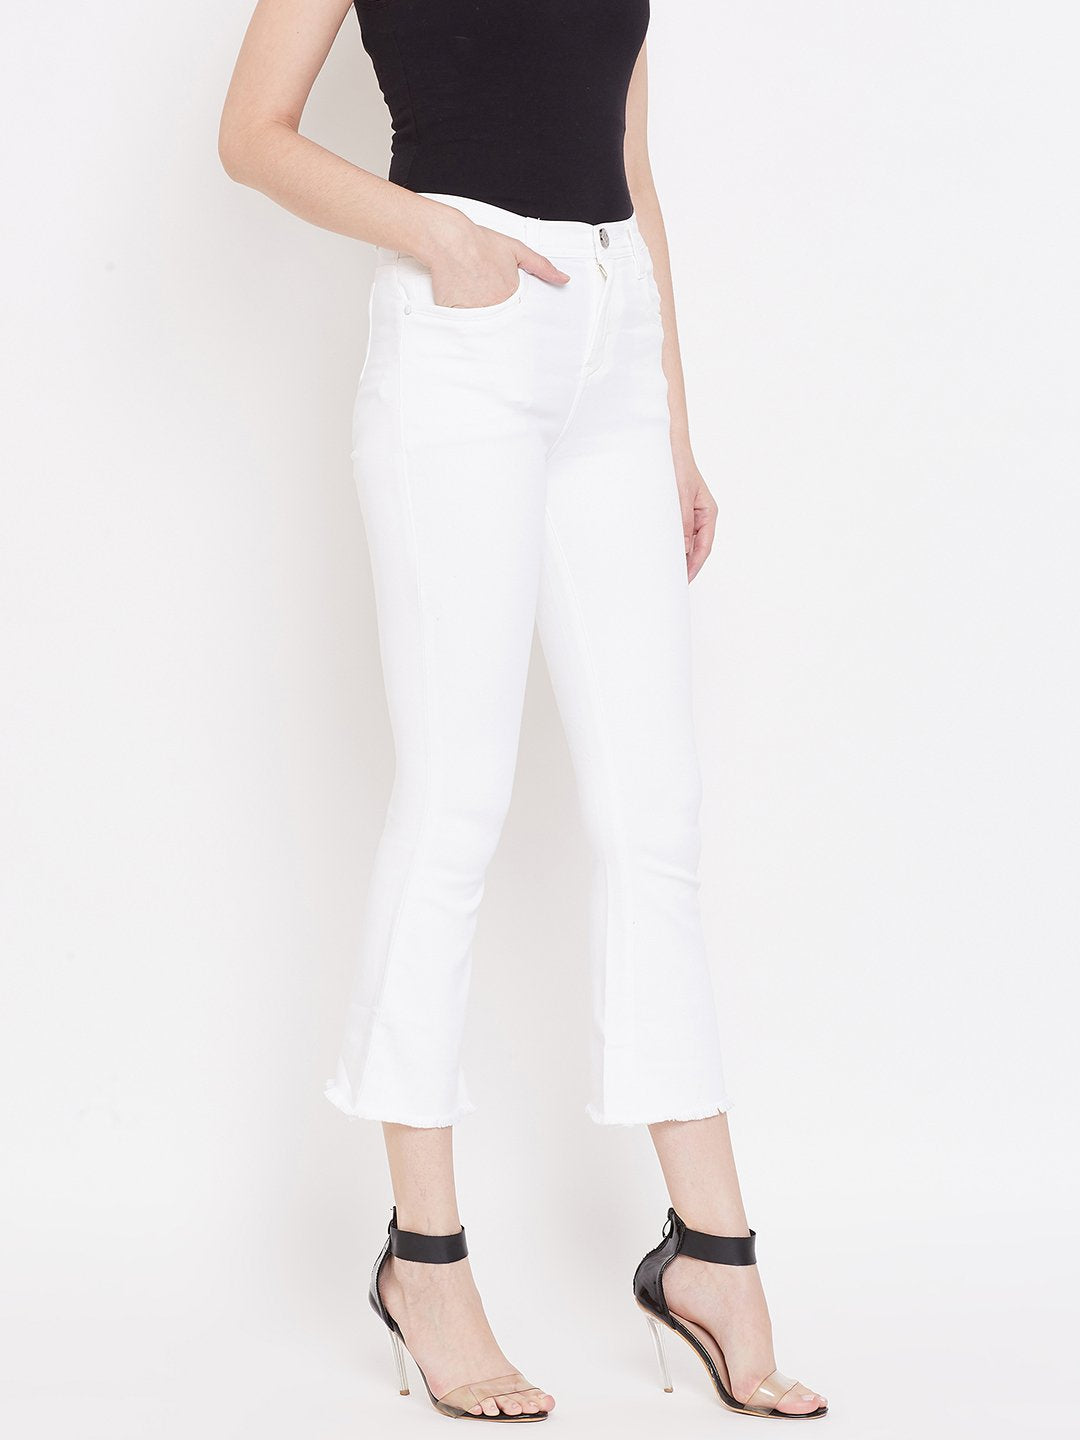 High Waist Boot Cut White Jeans - NiftyJeans